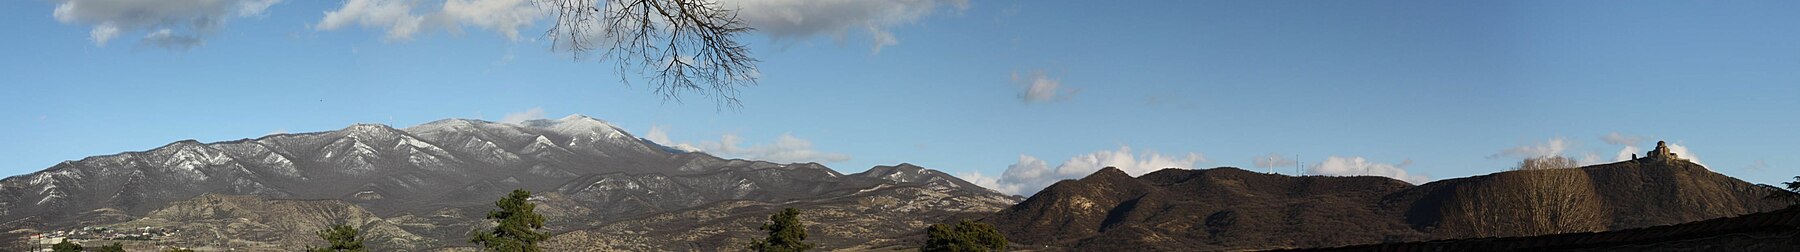 Monti Mtskheta.jpg